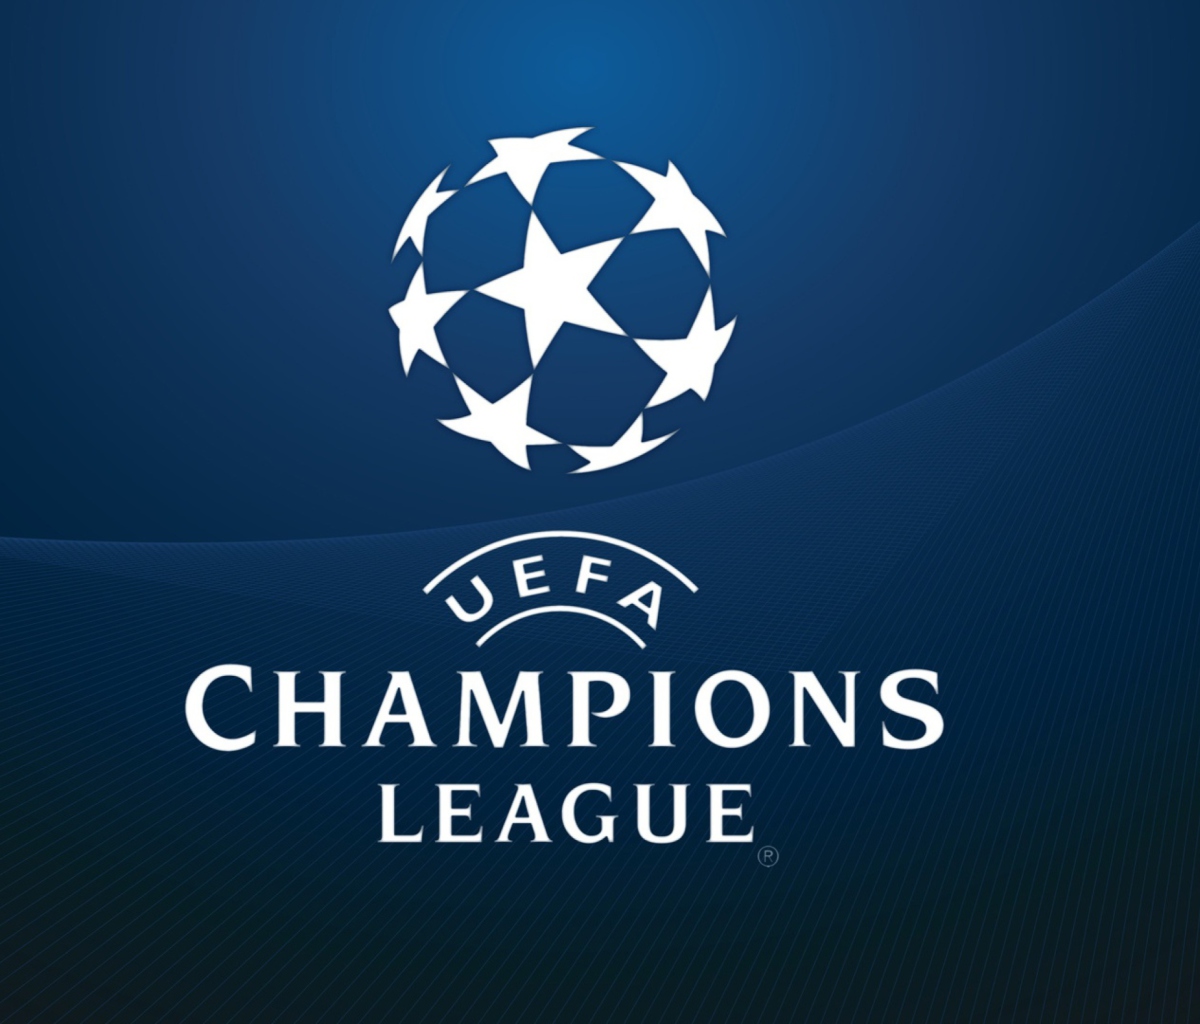 Uefa Champions League wallpaper 1200x1024